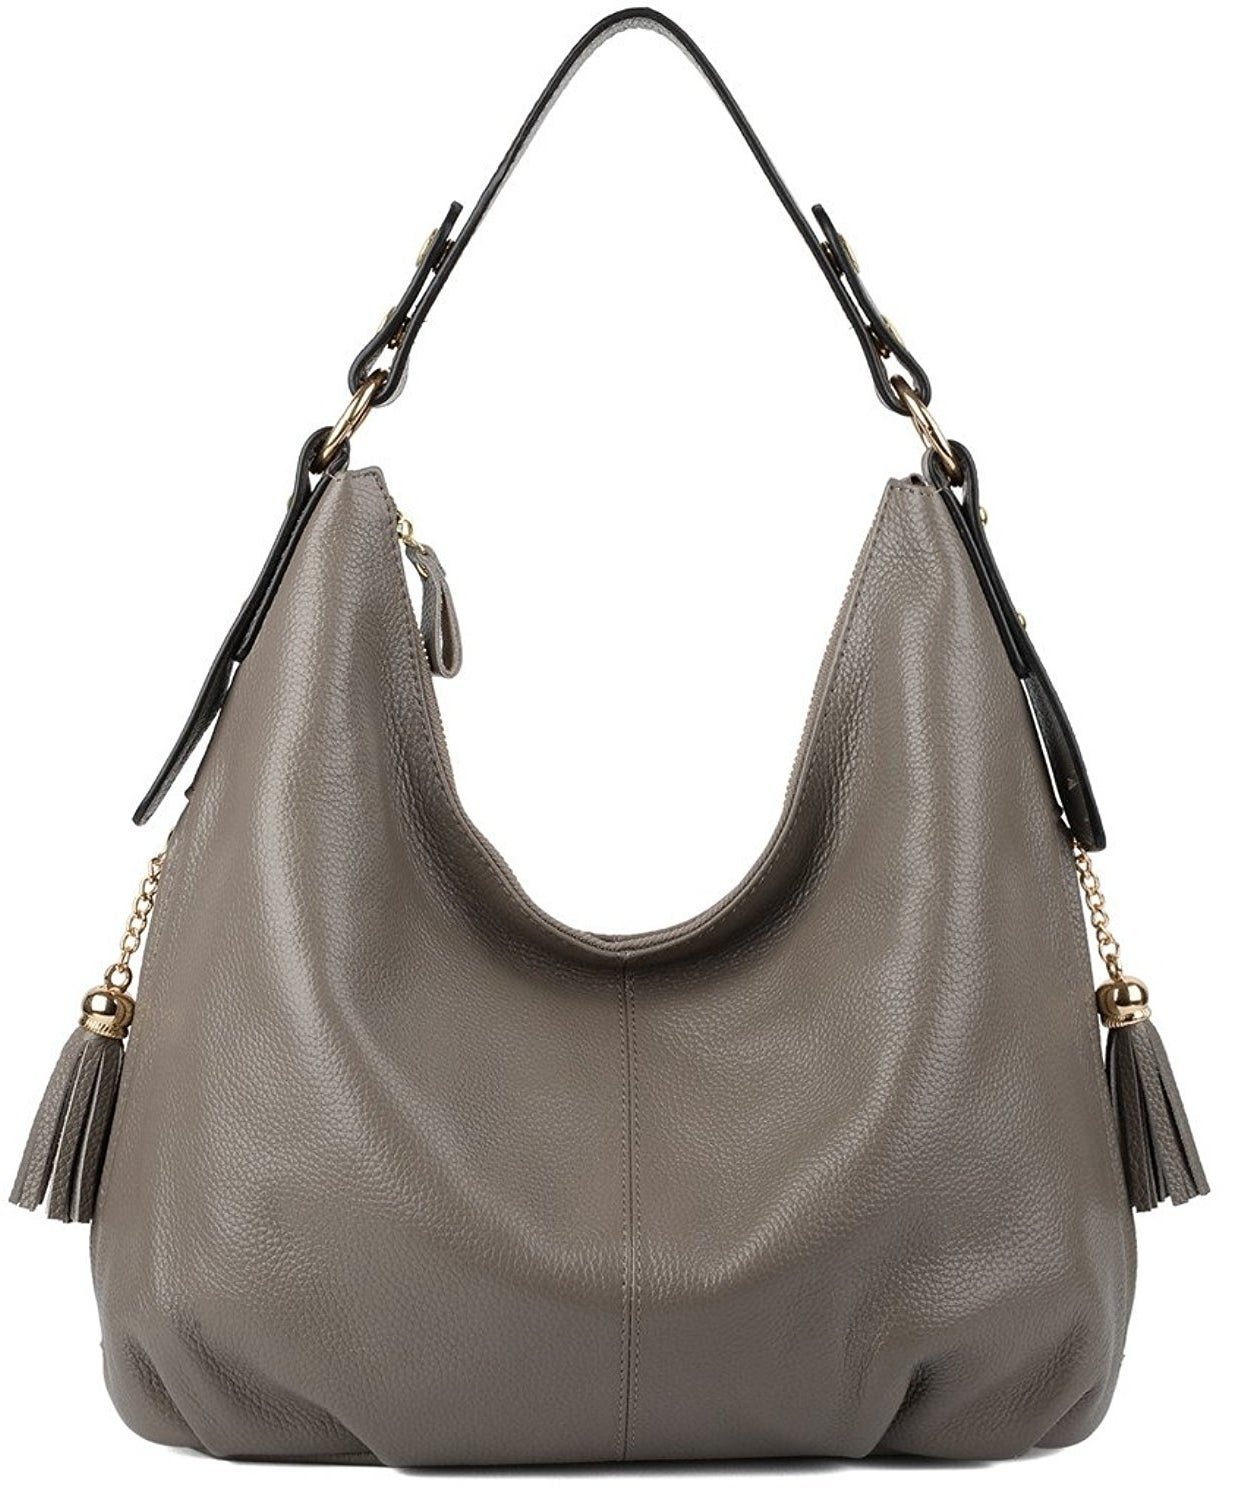 Favorite leather handbag